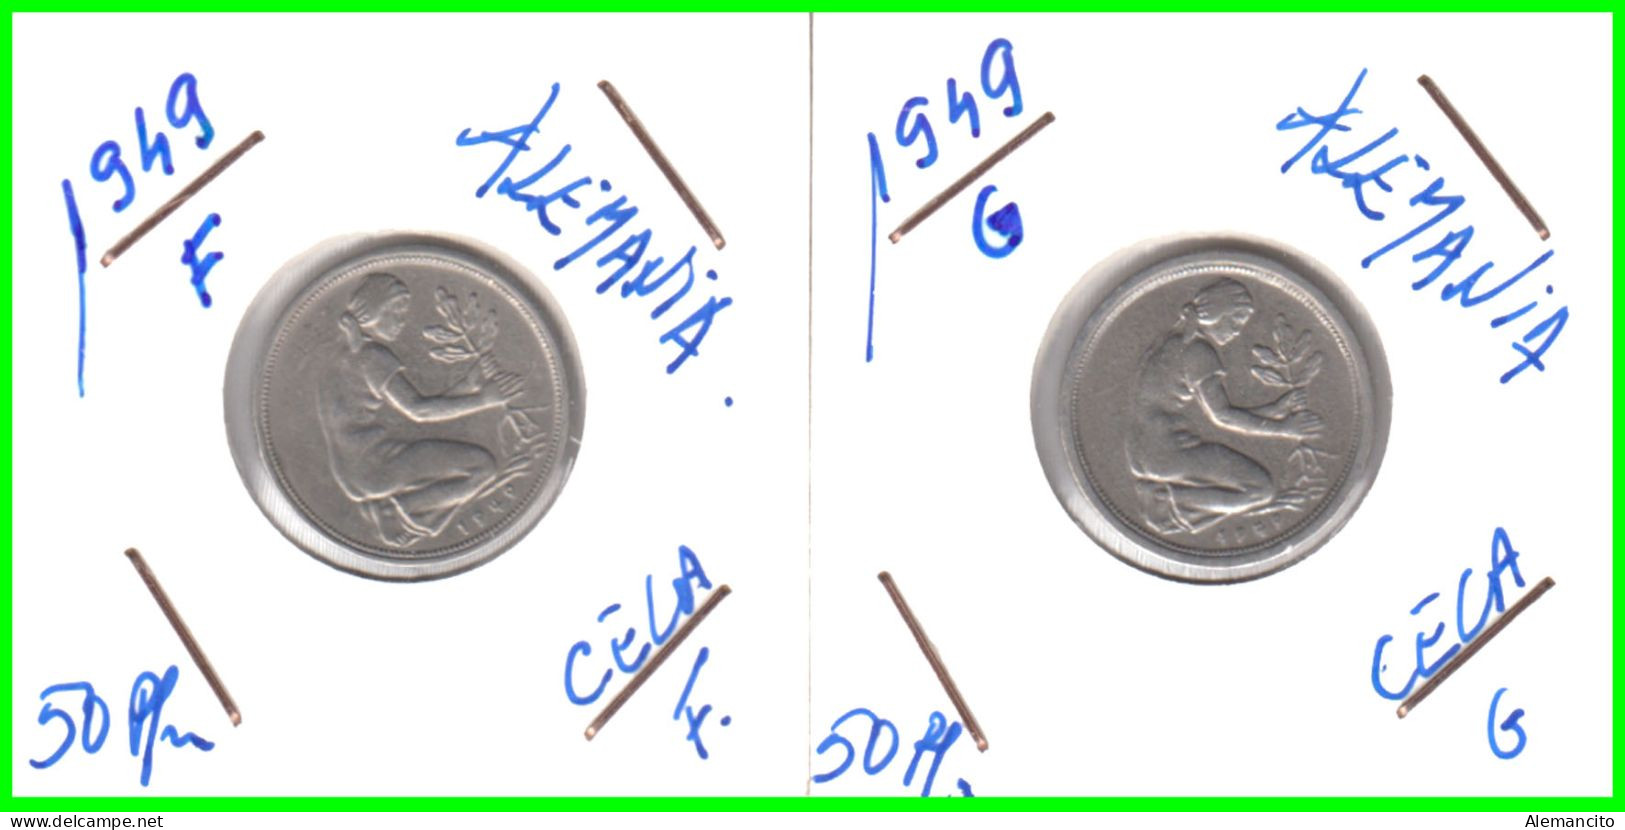 ALEMANIA -  GERMANY - 2 MONEDAS DE LA R.F. DE ALEMANIA DE 50 Pfn-DEL AÑO - 1949 CECA - F - STUTTGART - G - KARLSRTUHE - 50 Pfennig